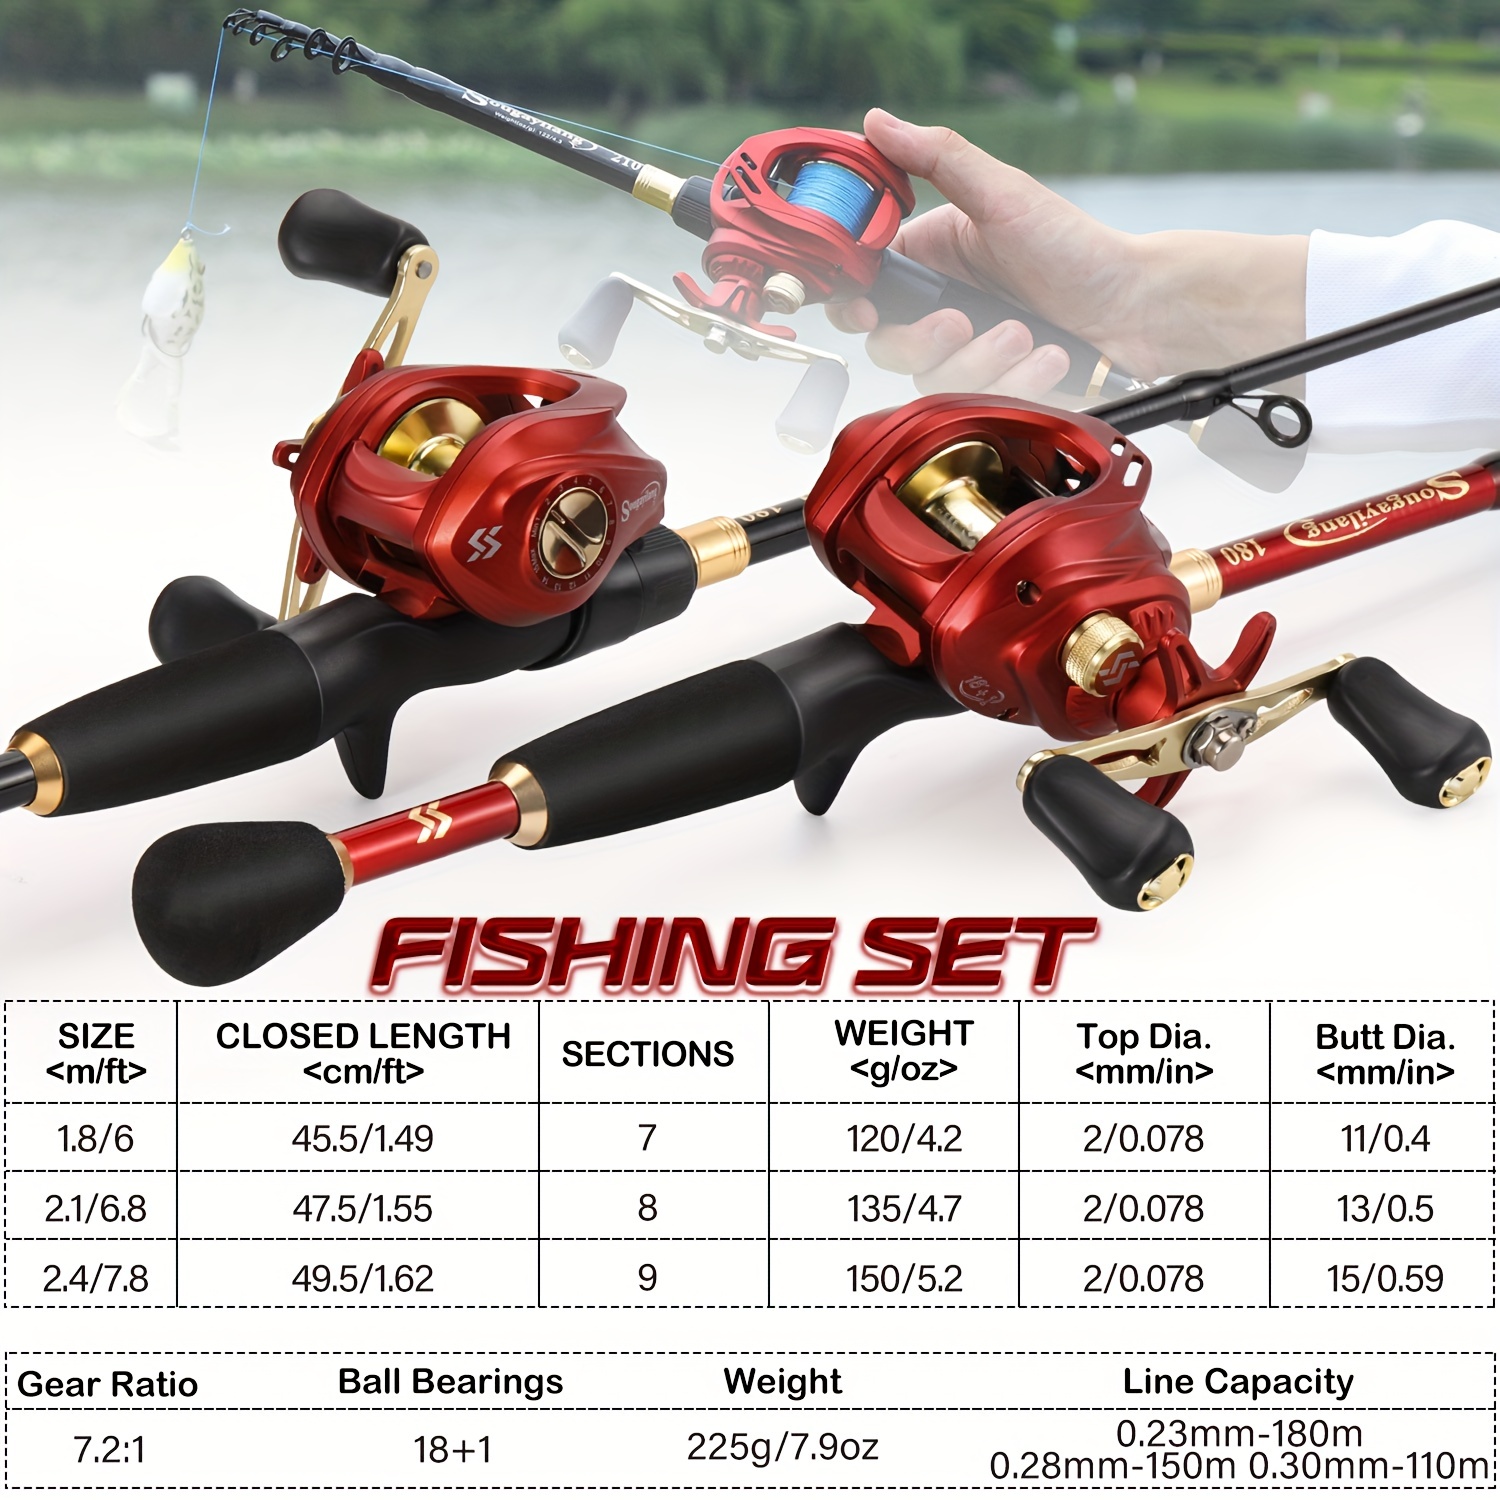 Sougayilang Casting Fishing Rods 1.8M 2.1M 2.4M Telescopic Fishing Rod  with12+1BB Baitcasting Fishing Reel for Bass Fishing Tackle Freshwater or